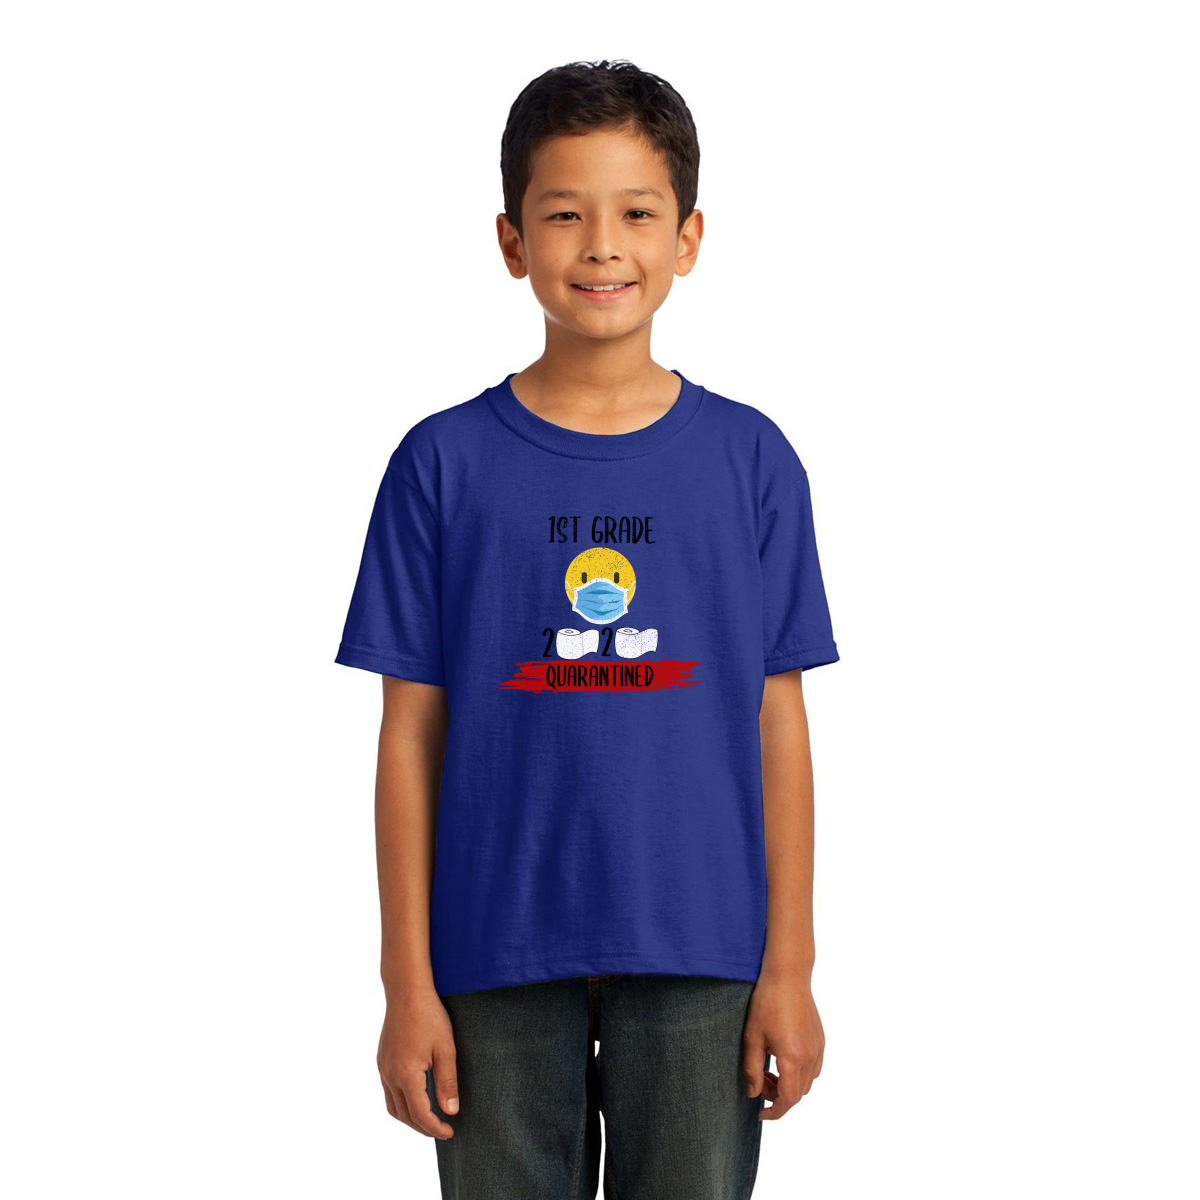 1st Grader Quarantined Kids T-shirt | Blue